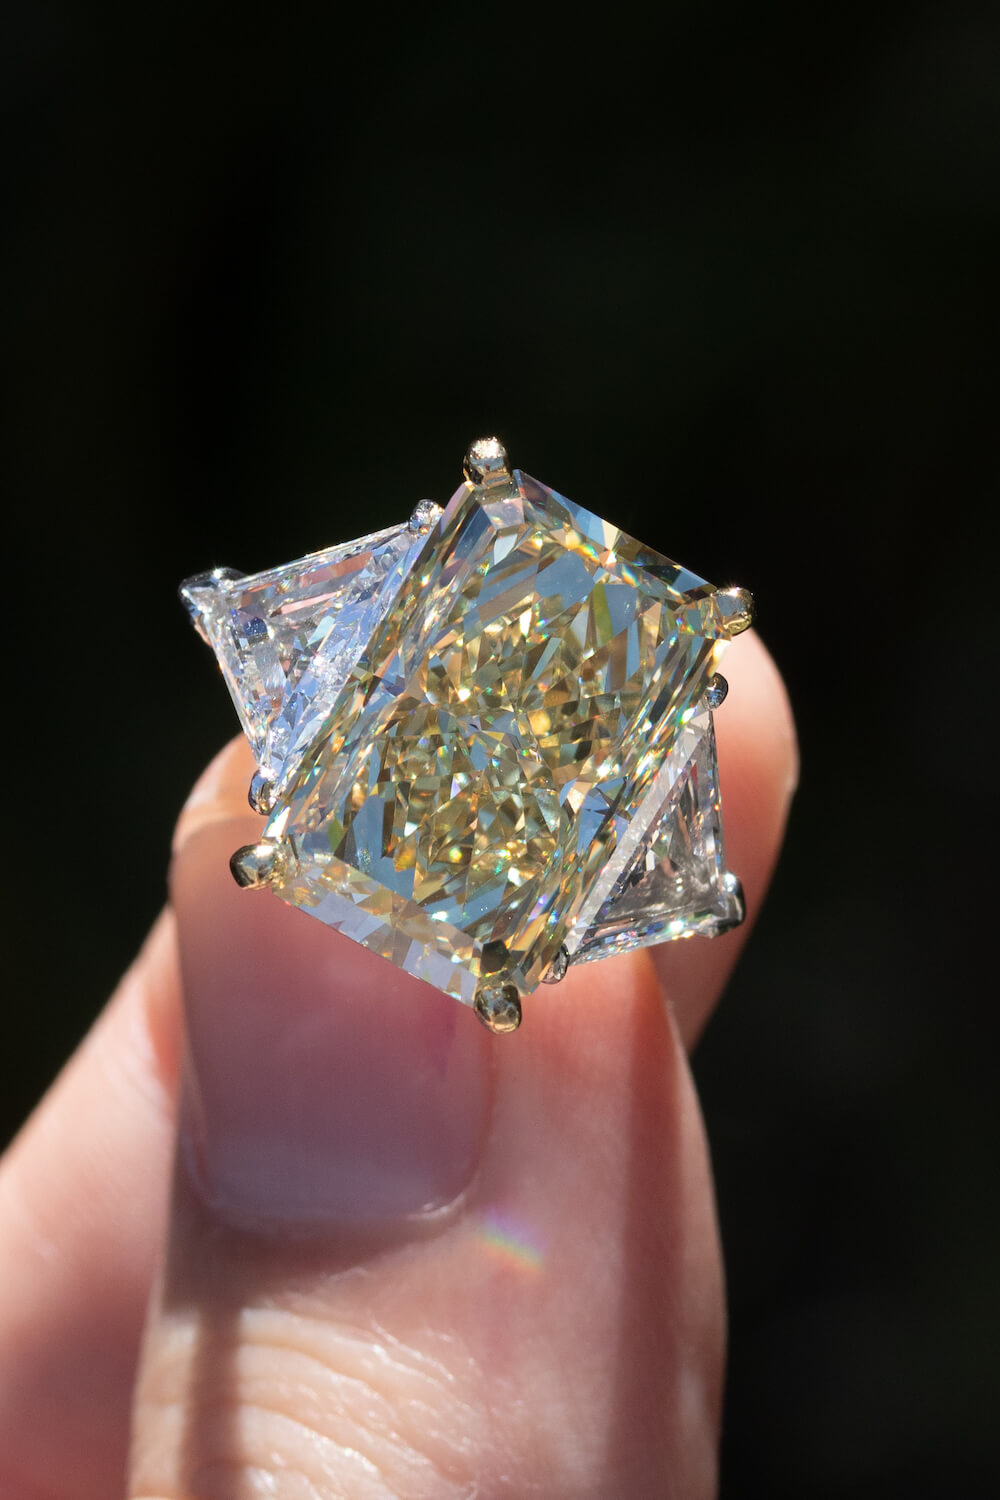 Internally flawless yellow 12 carat diamond for sale